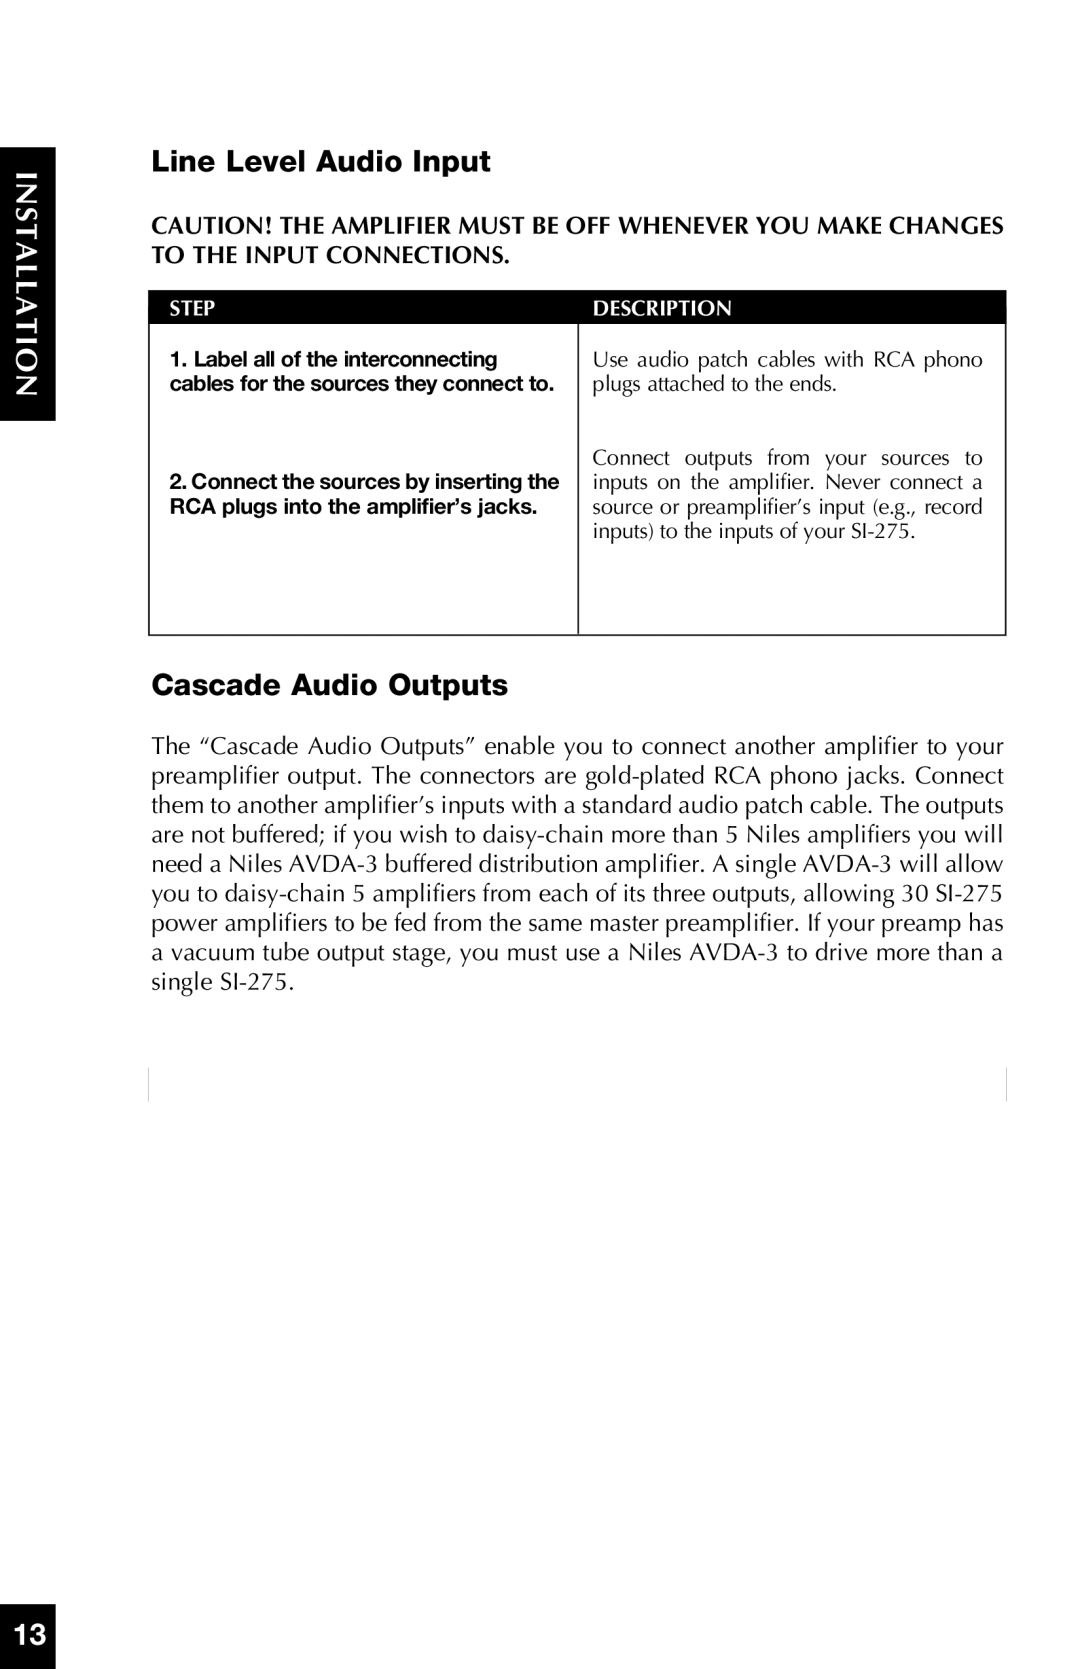 Niles Audio SI-275 manual Line Level Audio Input, Cascade Audio Outputs, Installation 